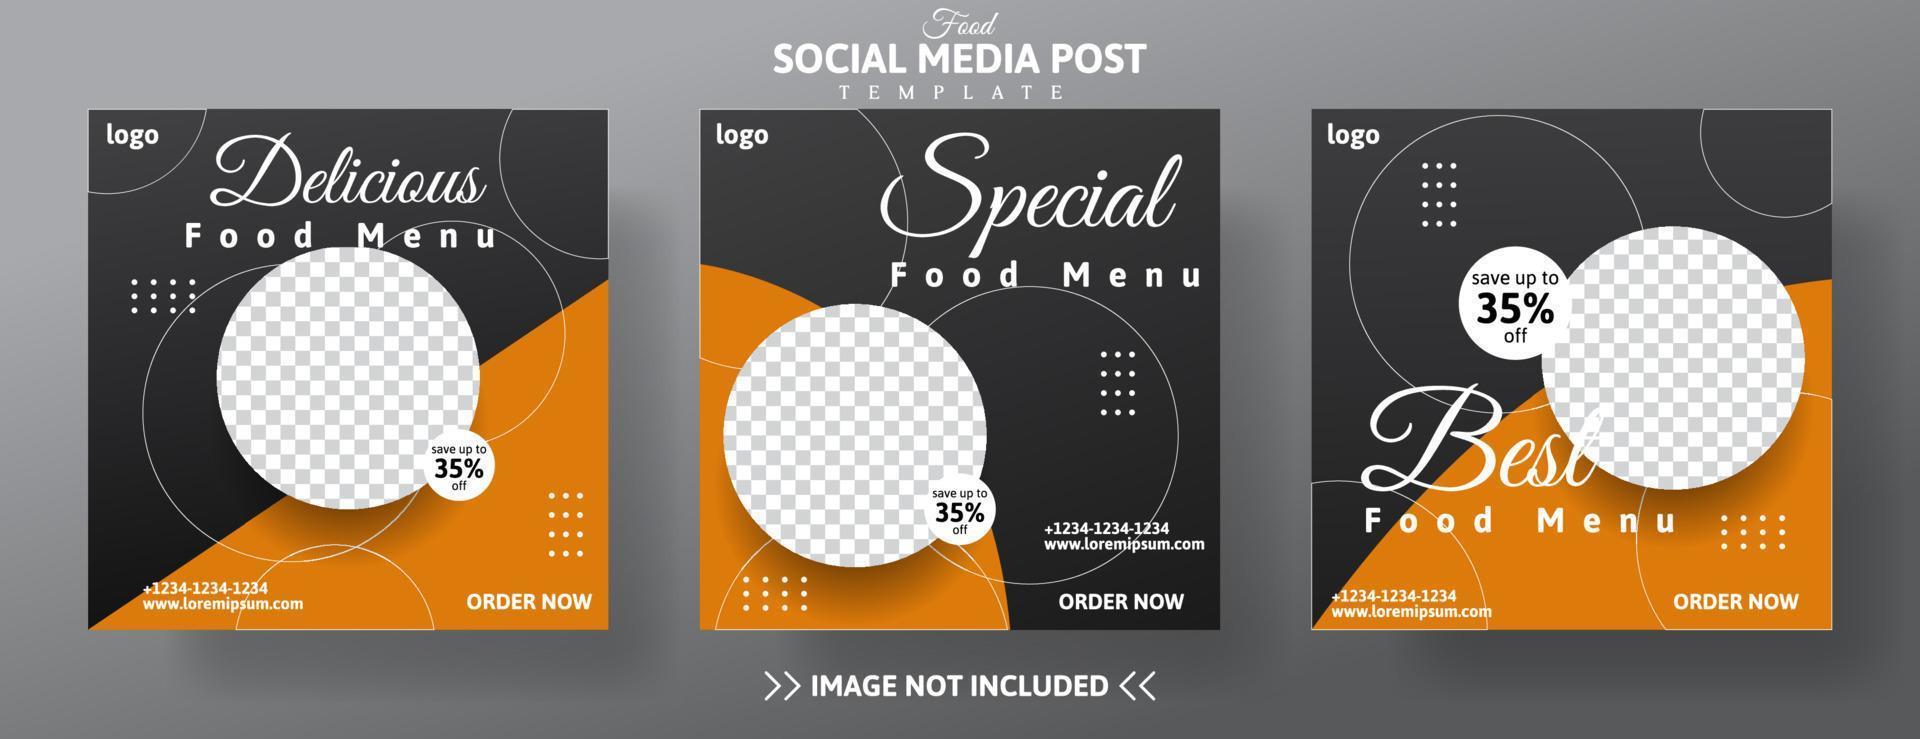 food social media post template design for promotion. business vector vector illustration